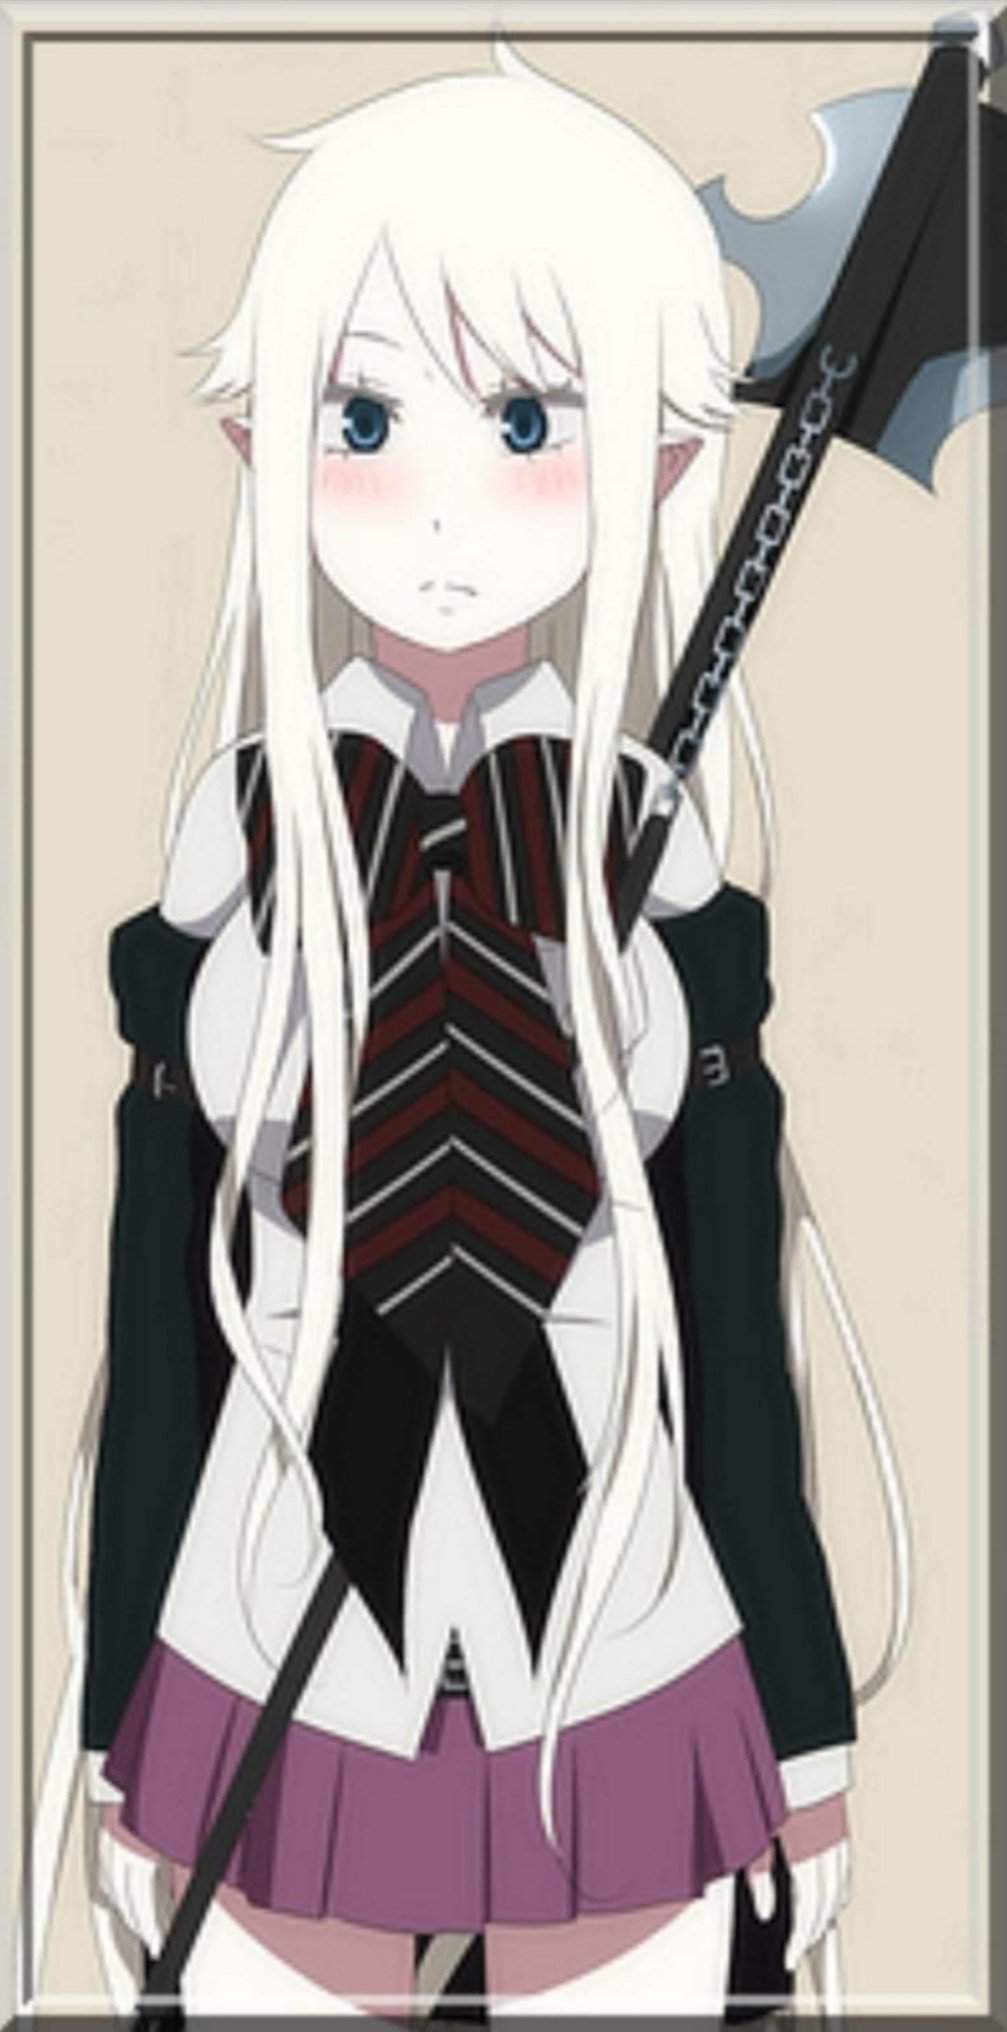 Name: Aura Last name: Shimizu Age: 15-20 Height: 160cm Hair color: White/Bl...